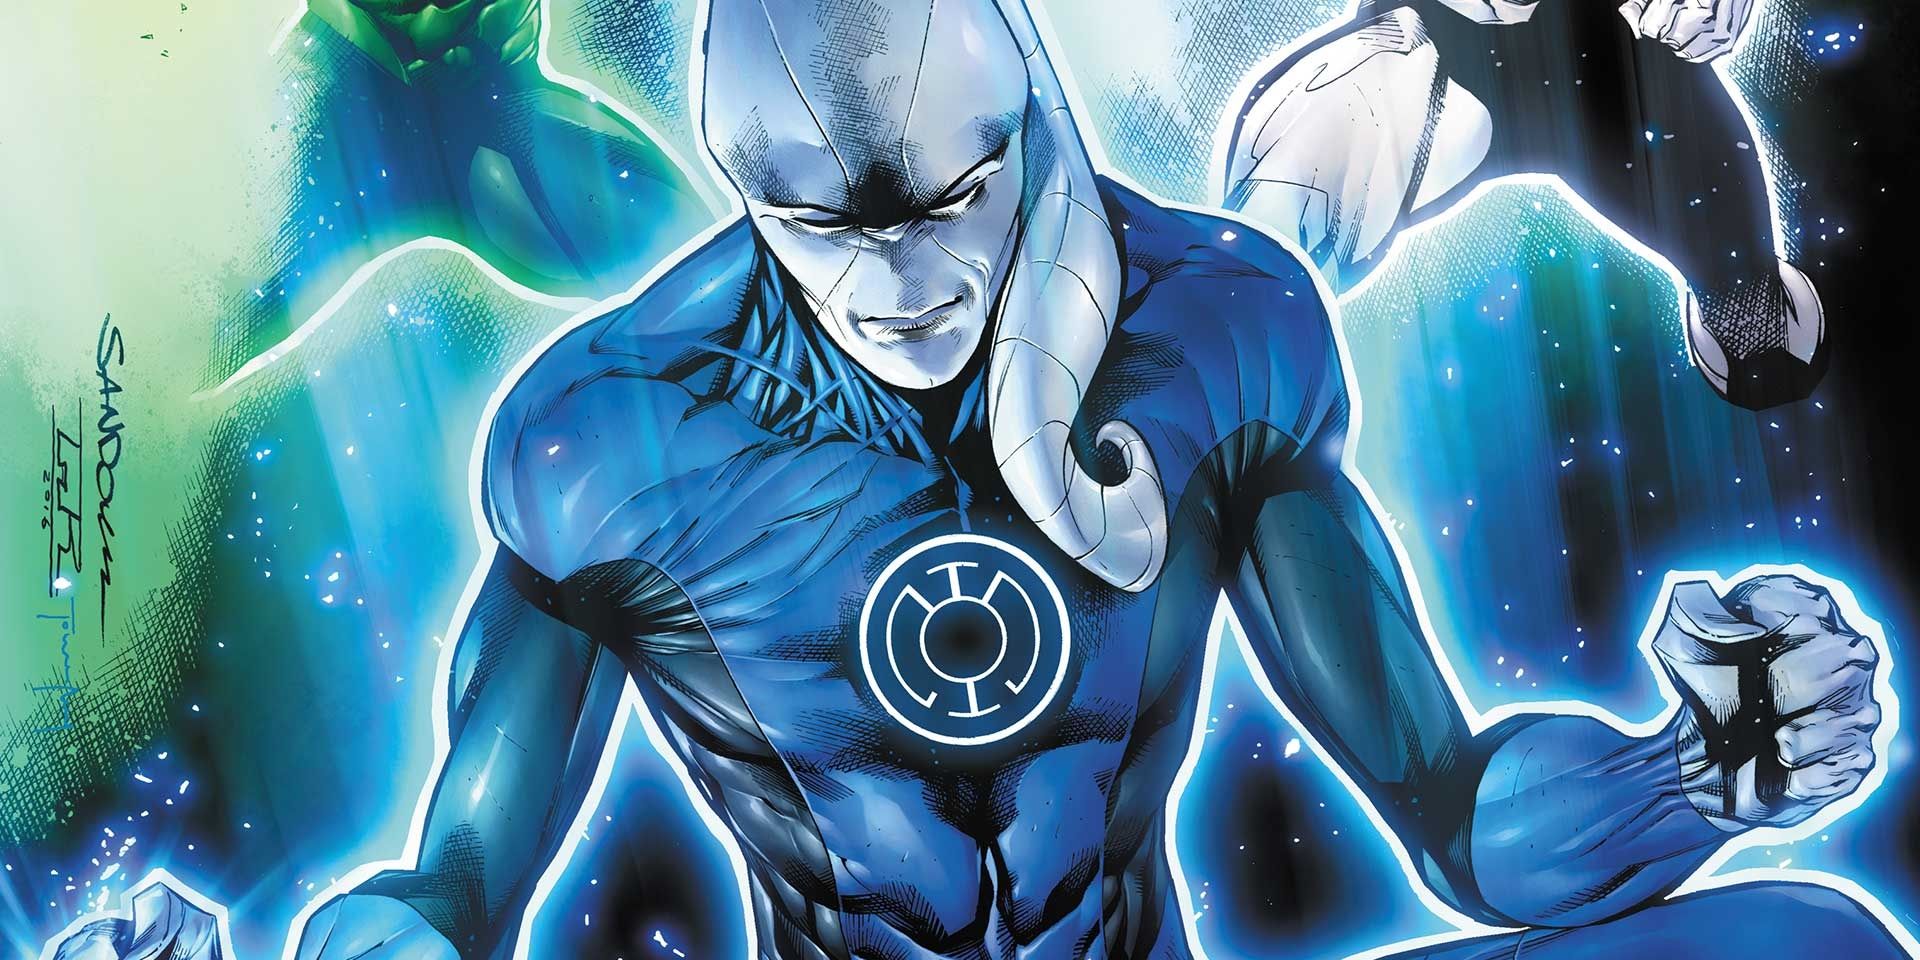 A Blue Lantern using his power ring